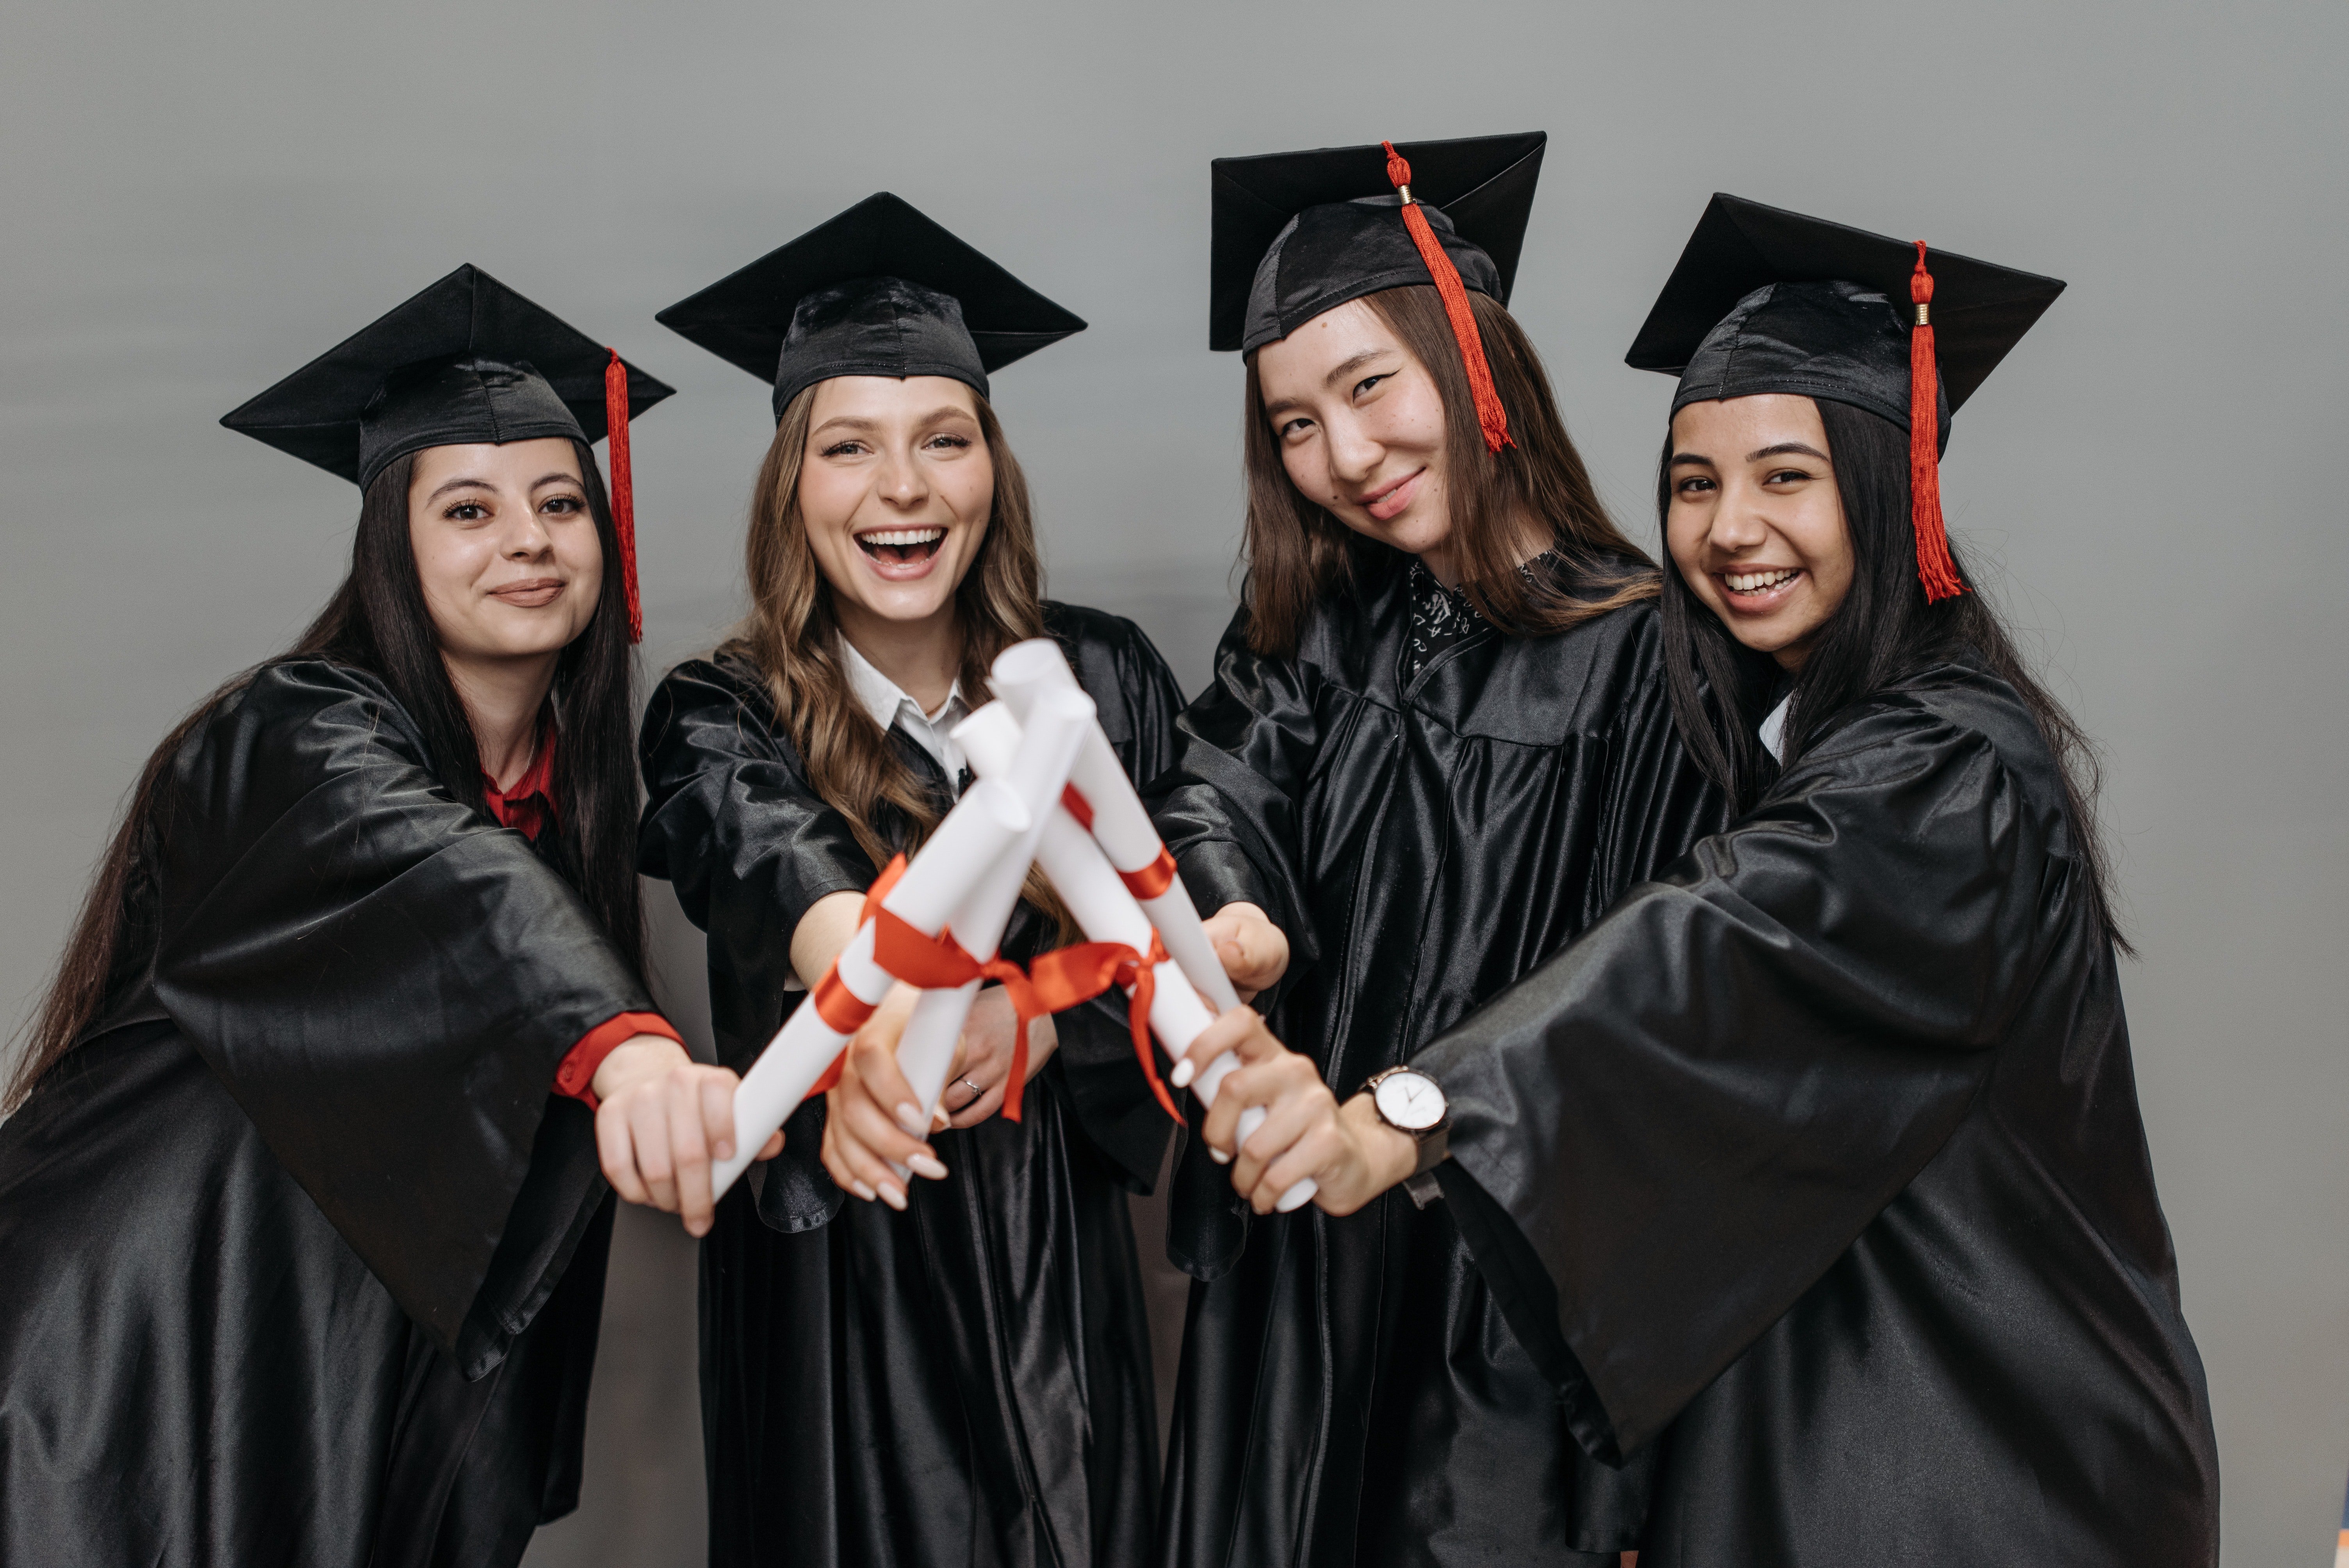 Women holding their diplomas | Source: Pexels